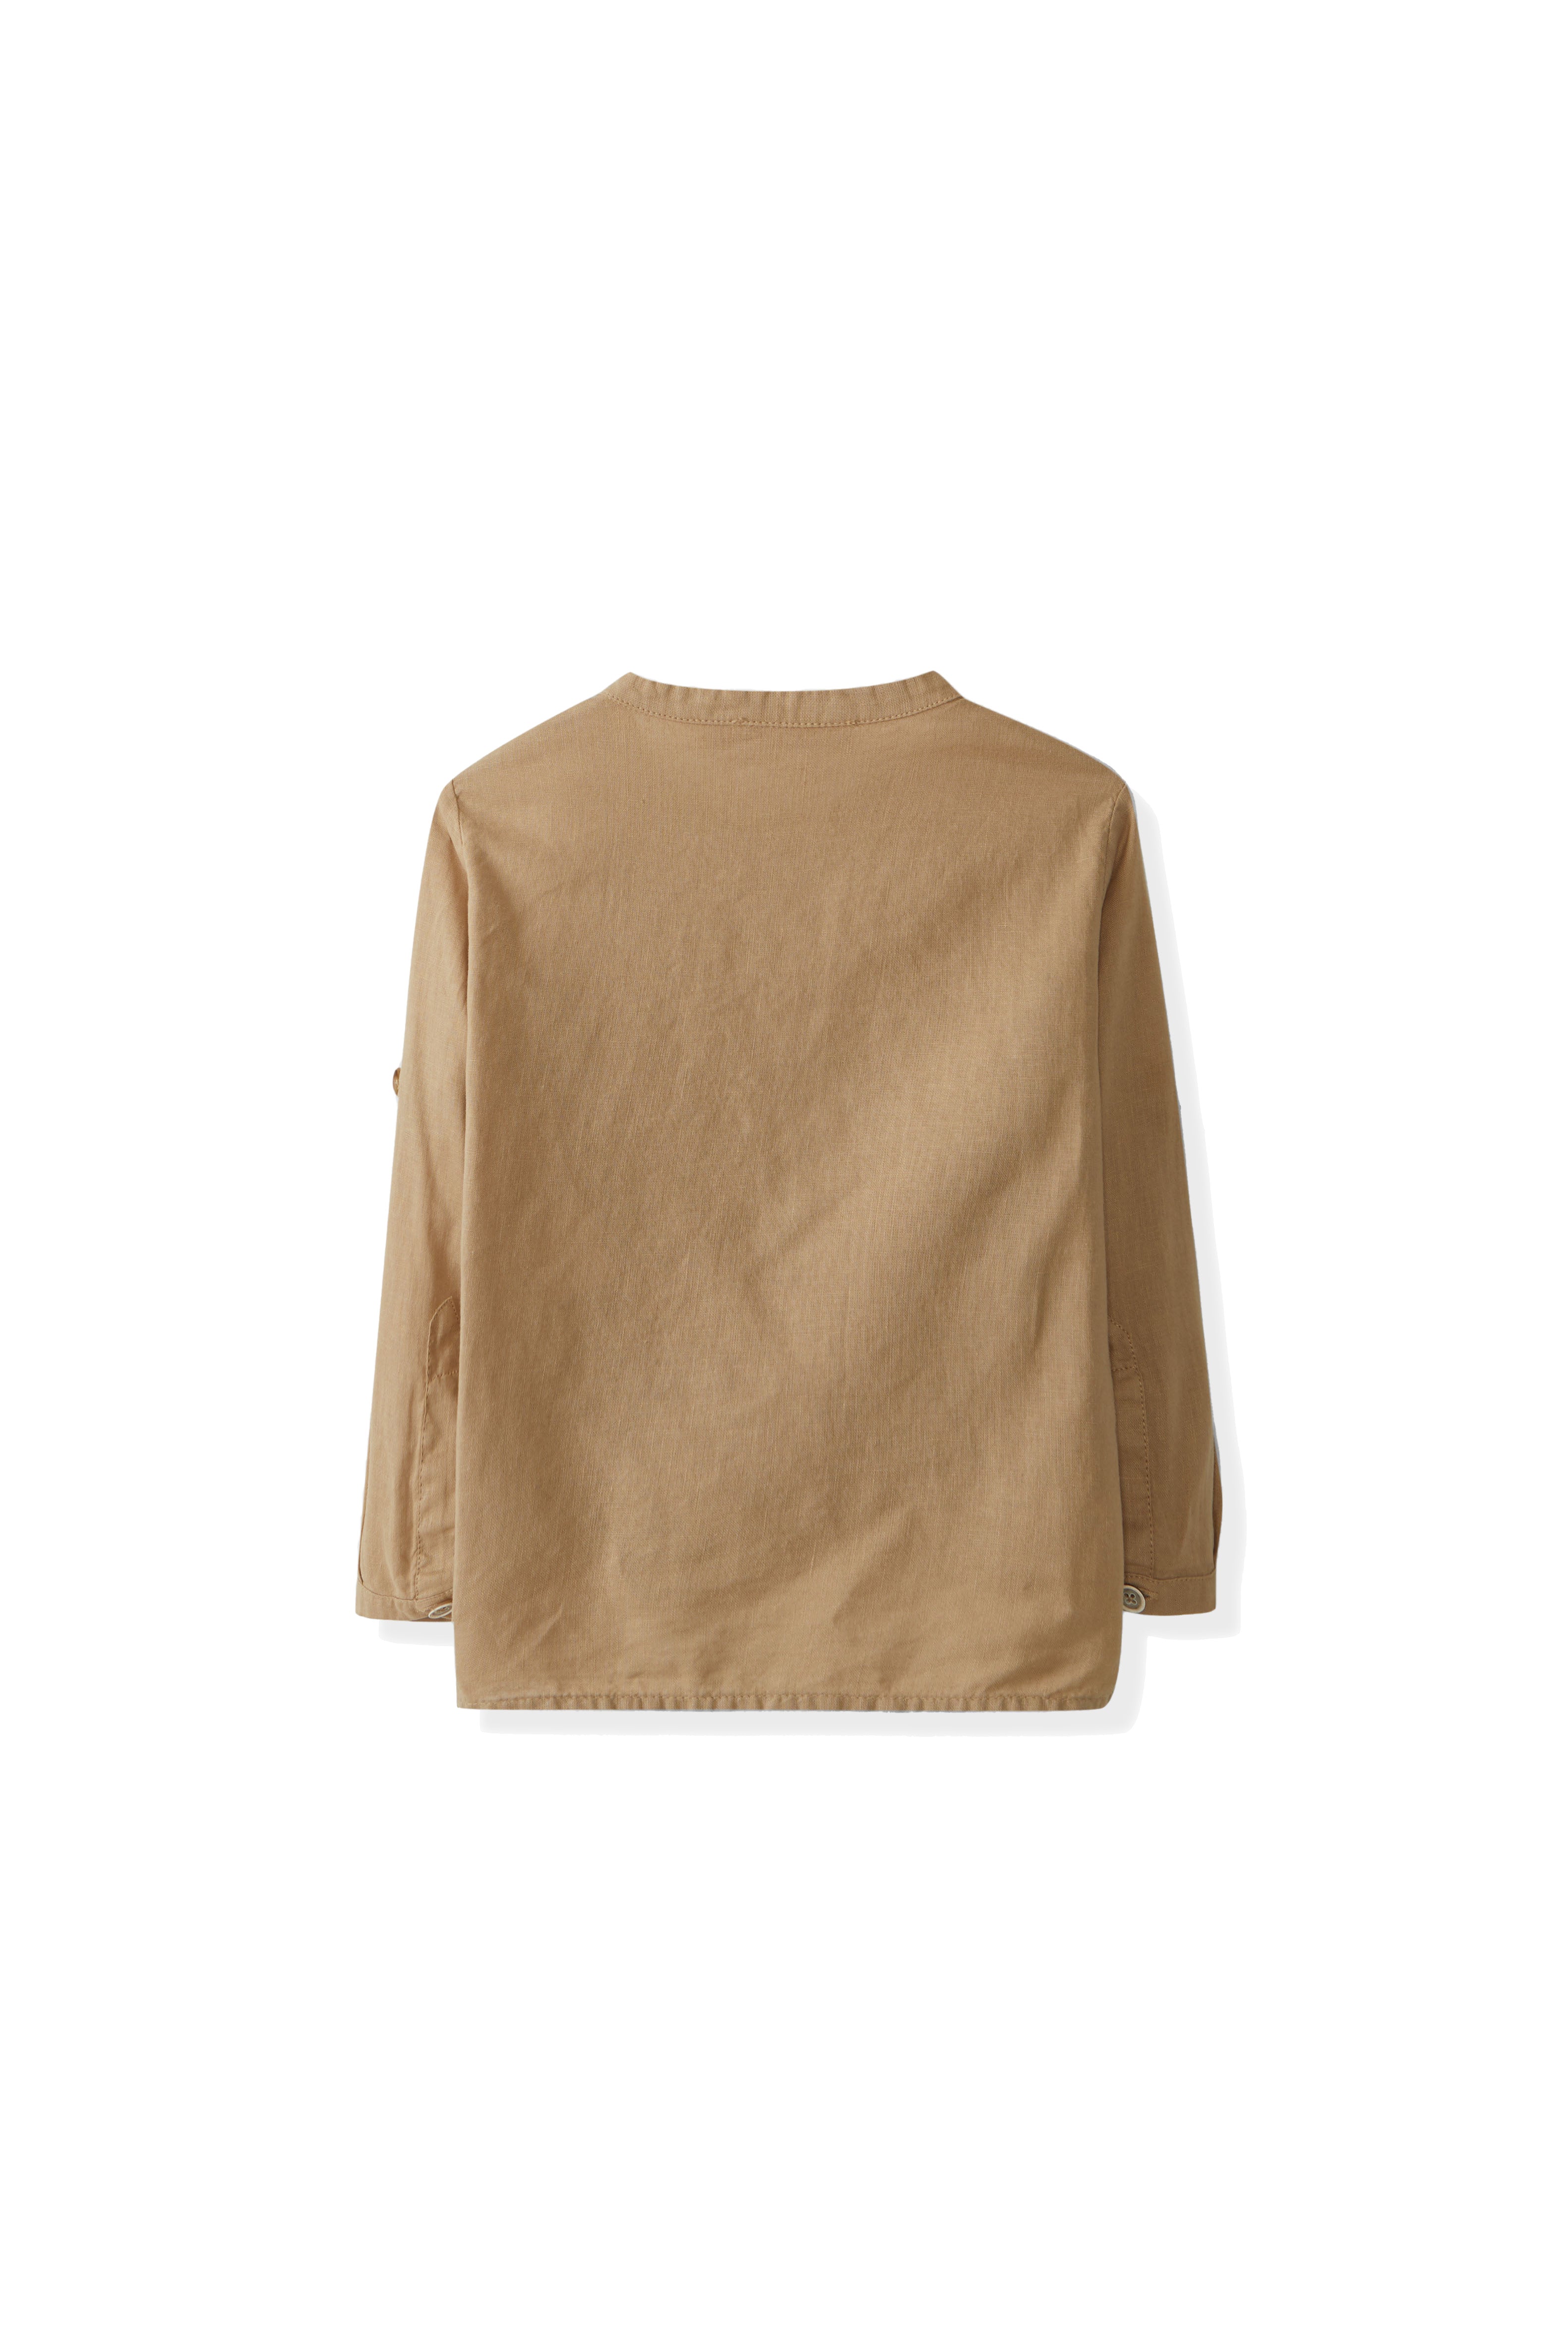 Laranjinha linen shirt in Camel color